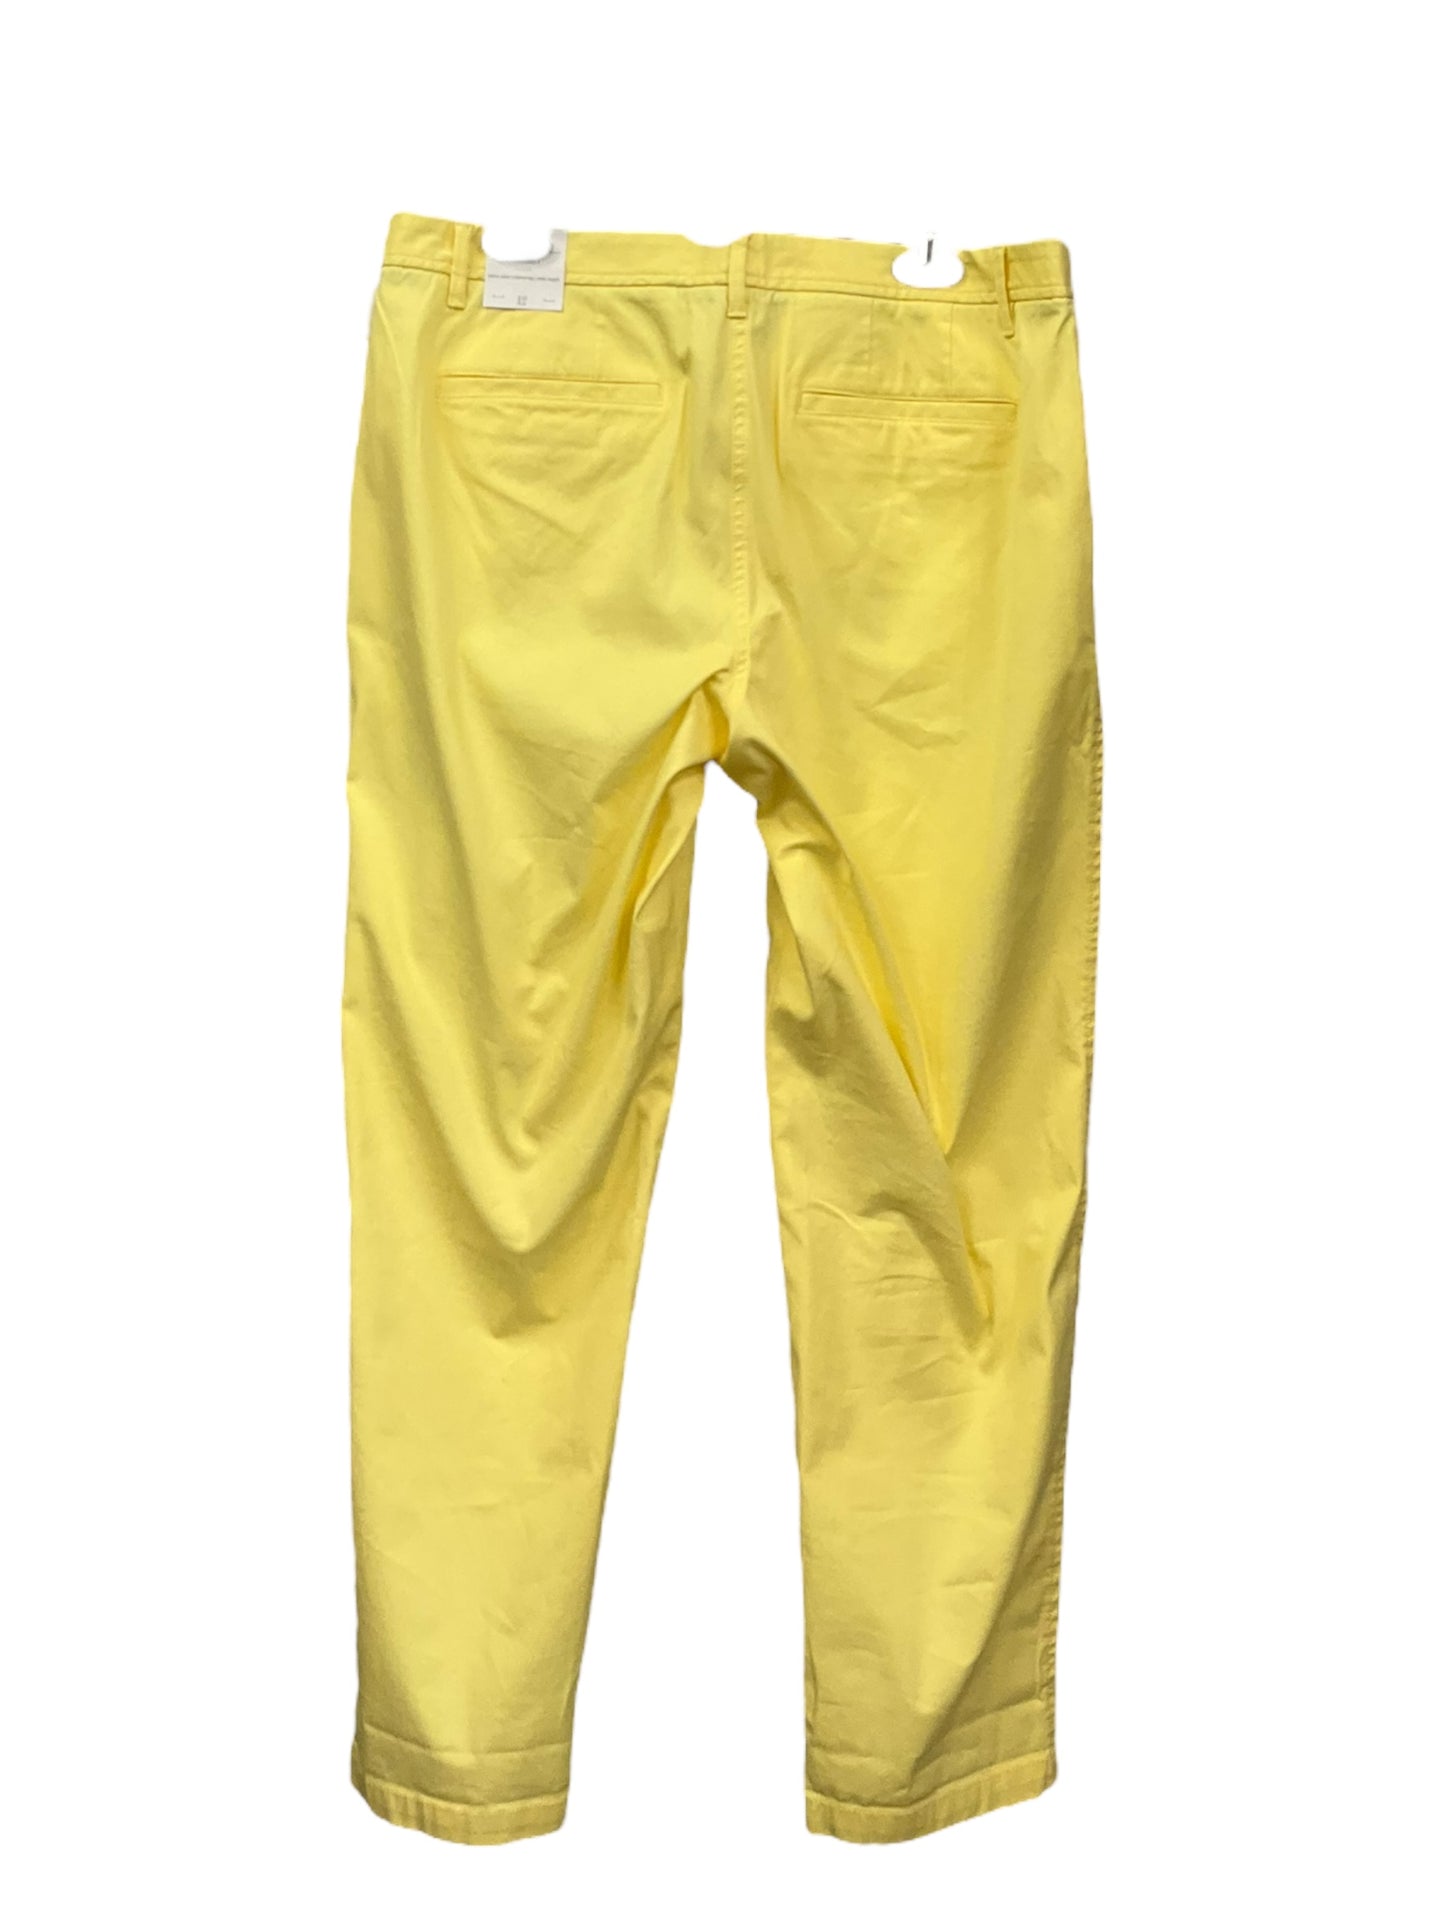 Pants Chinos & Khakis By Talbots  Size: 12